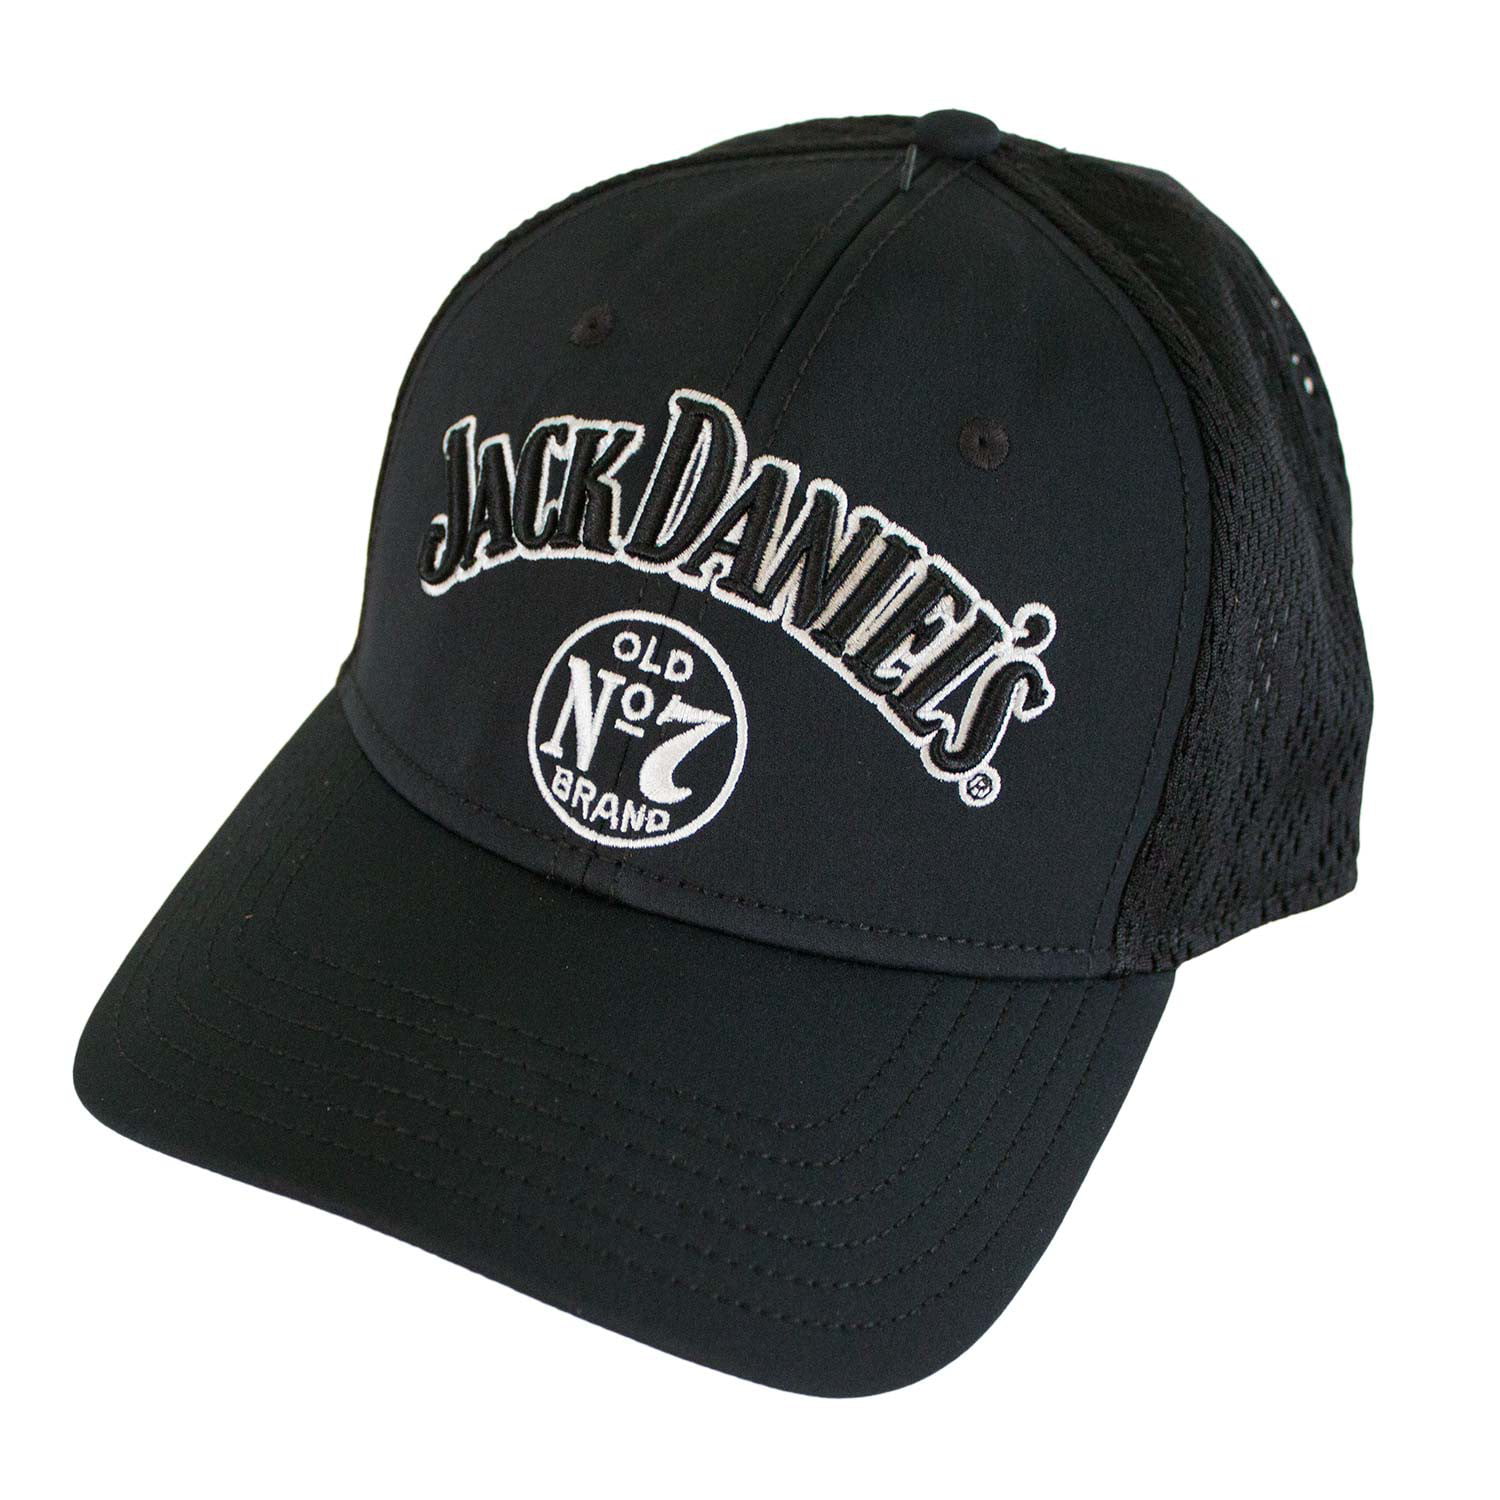 Jack Daniels Men's Performance Baseball Cap Hat Poly/Spandex Black/Gray JD77-114 